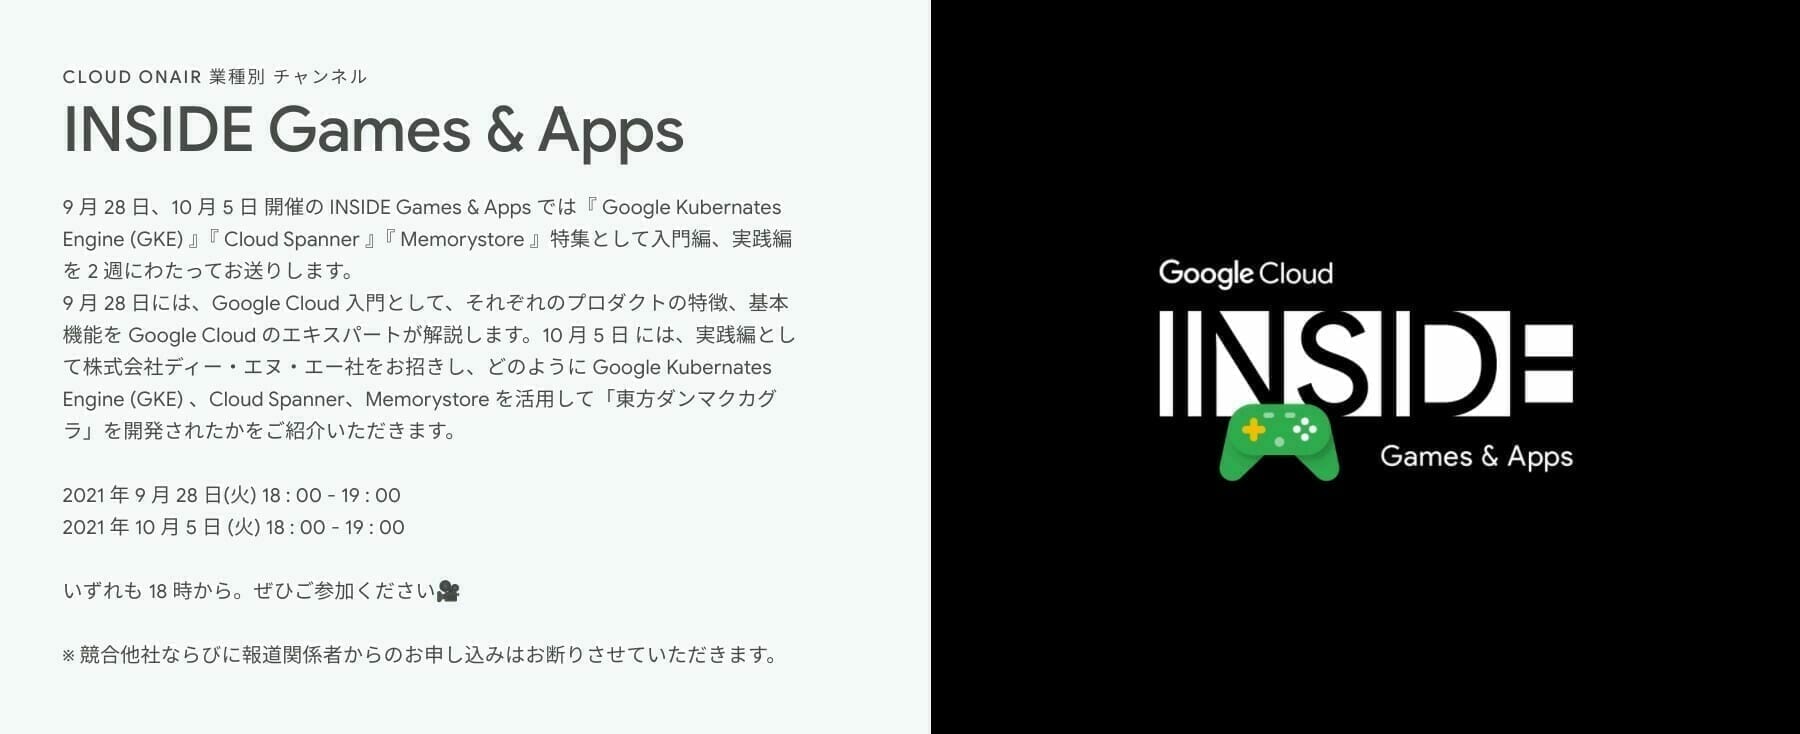 [GCP] Google Cloud INSIDE Games & Apps